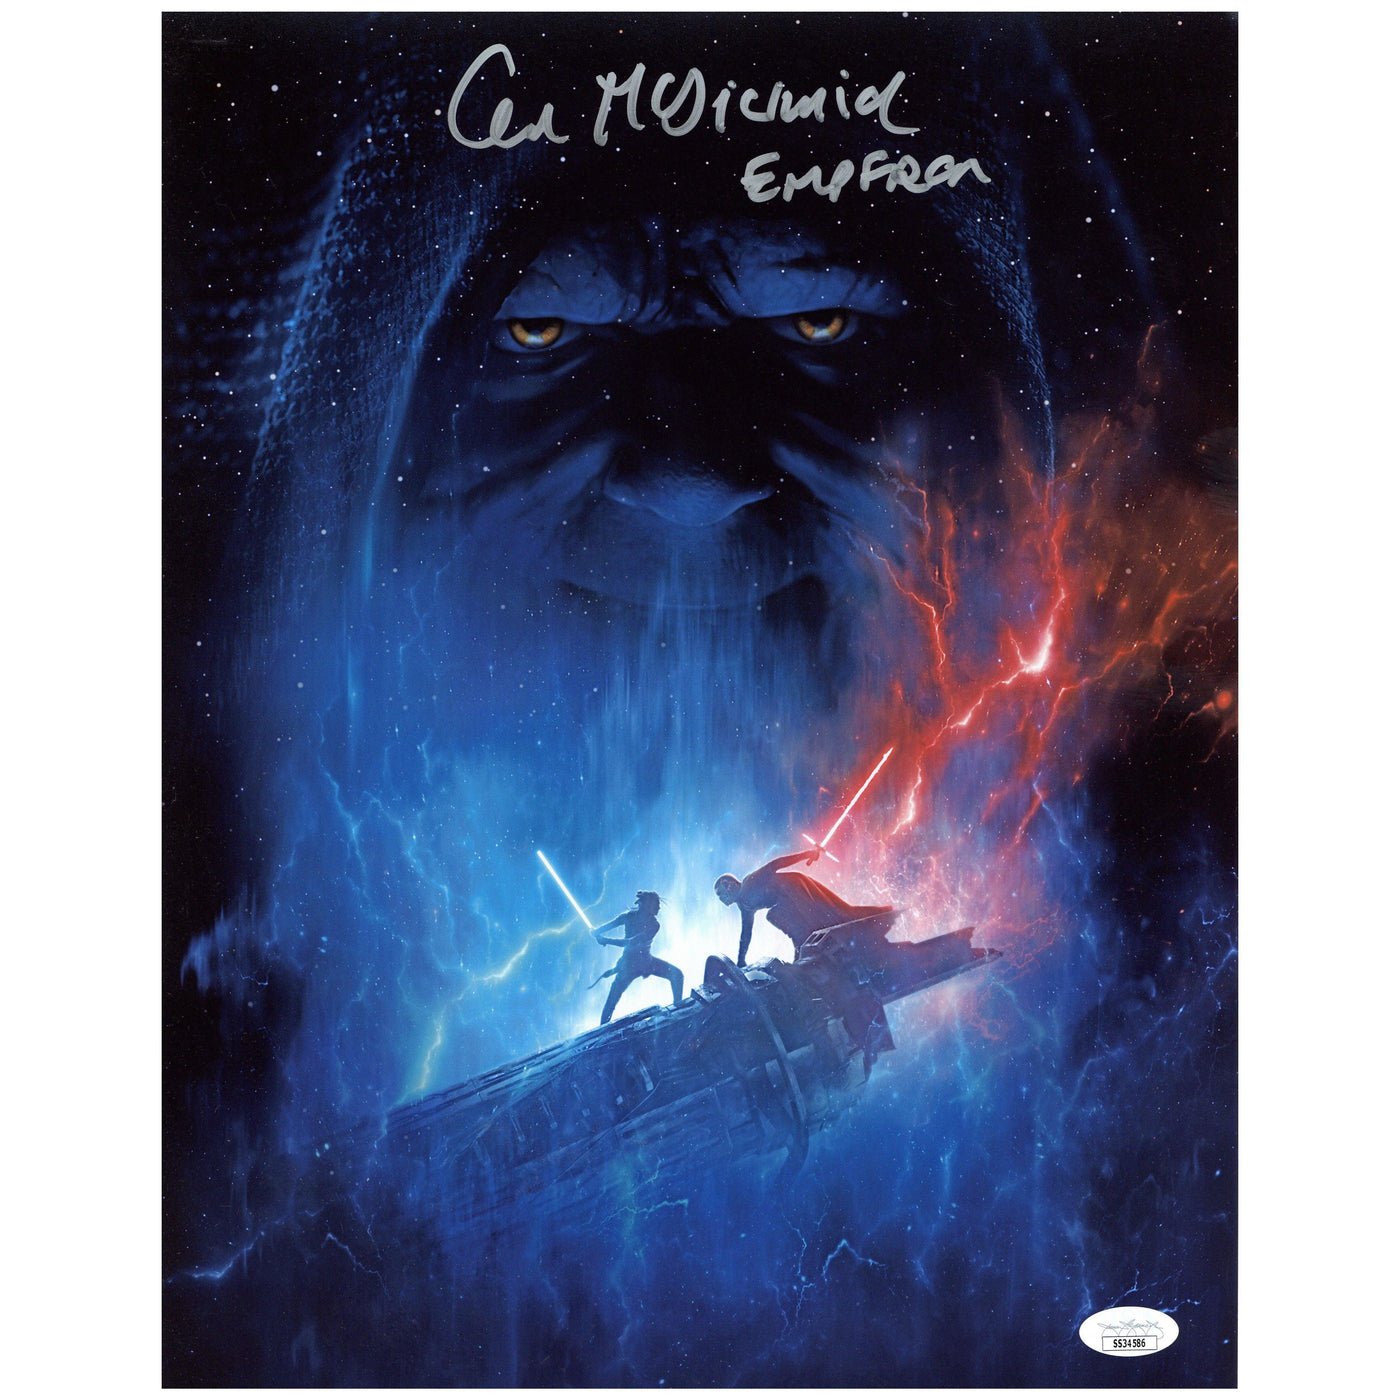 Ian McDiarmid Signed 11x14 Photo Star Wars Emperor Autographed JSA COA 2